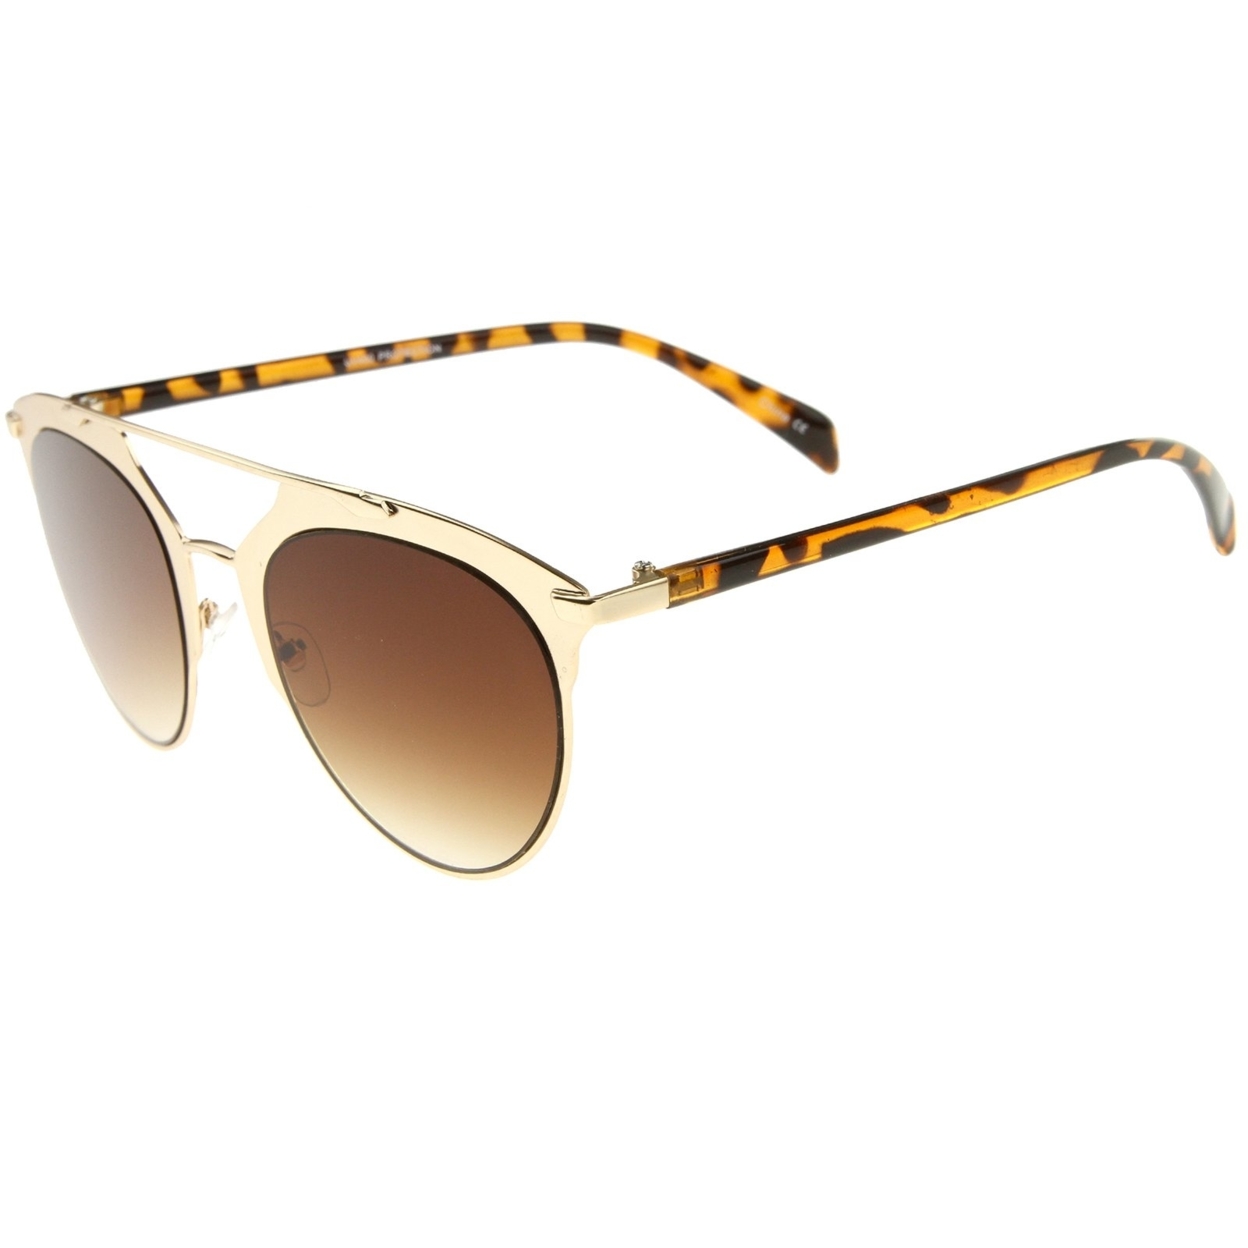 Modern Fashion Matte Metal Frame Double Bridge Pantos Aviator Sunglasses 55mm - Matte Gold-Tortoise / Amber